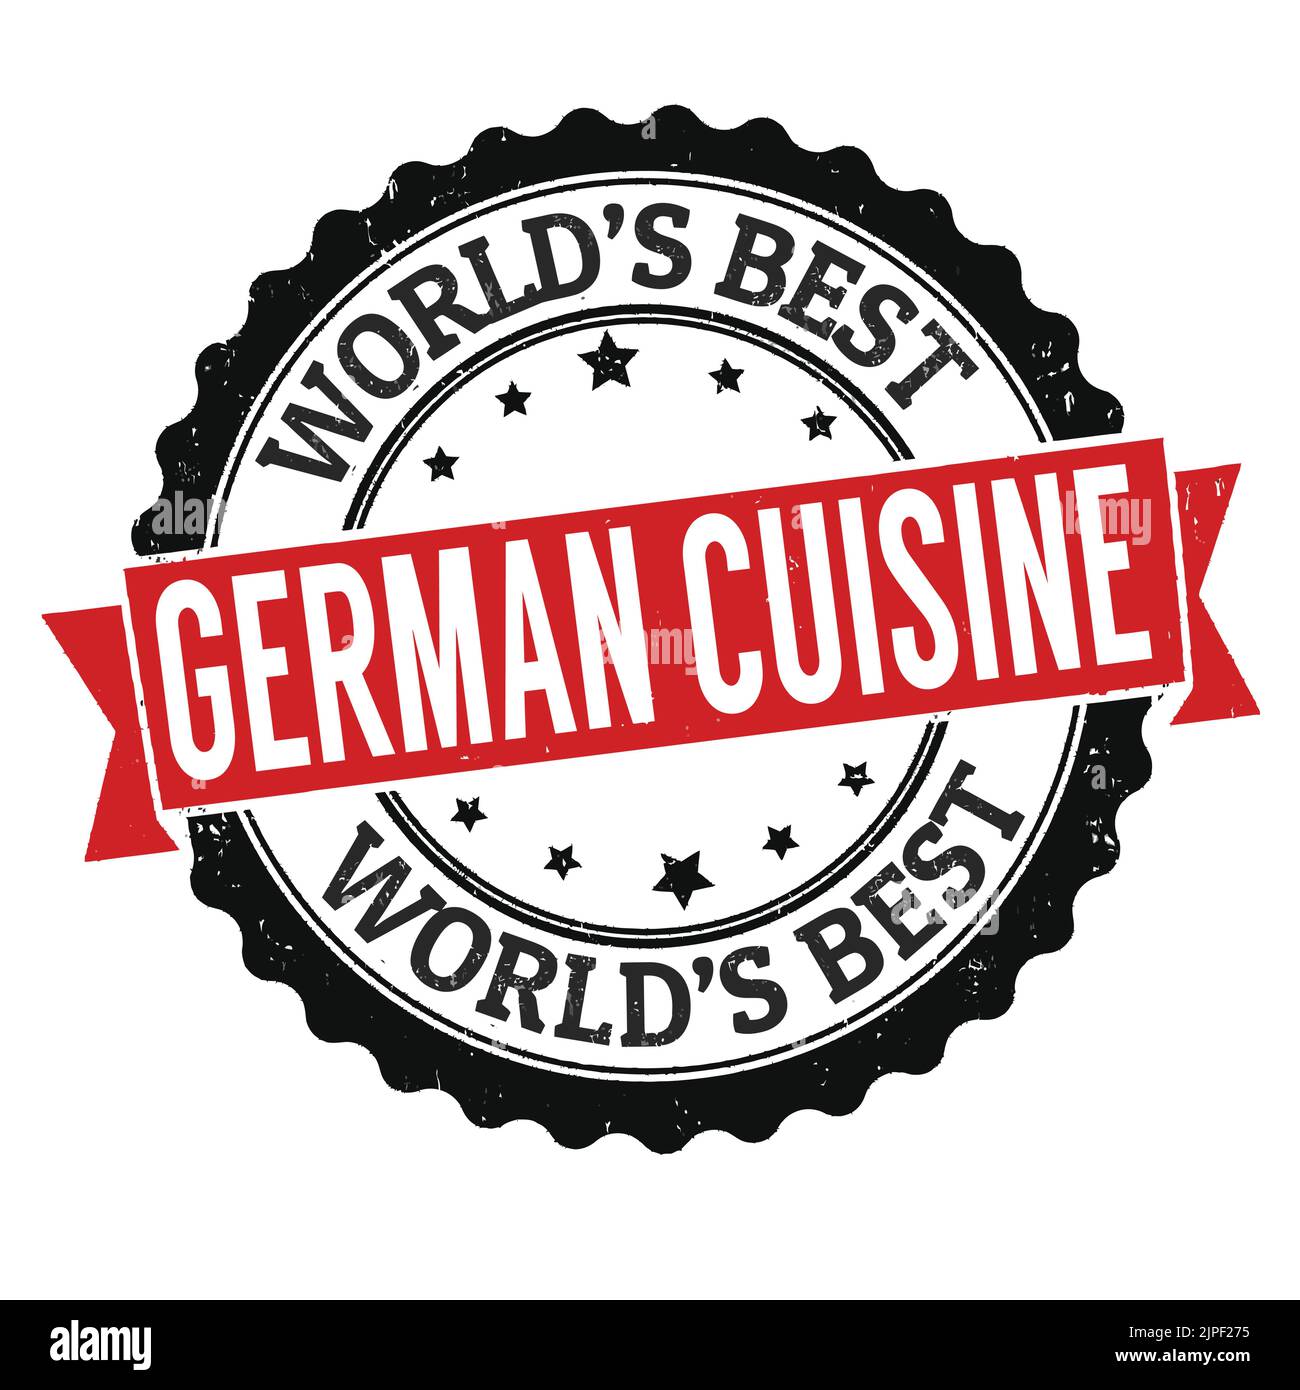 German cuisine grunge rubber stamp on white background, vector illustration Stock Vector